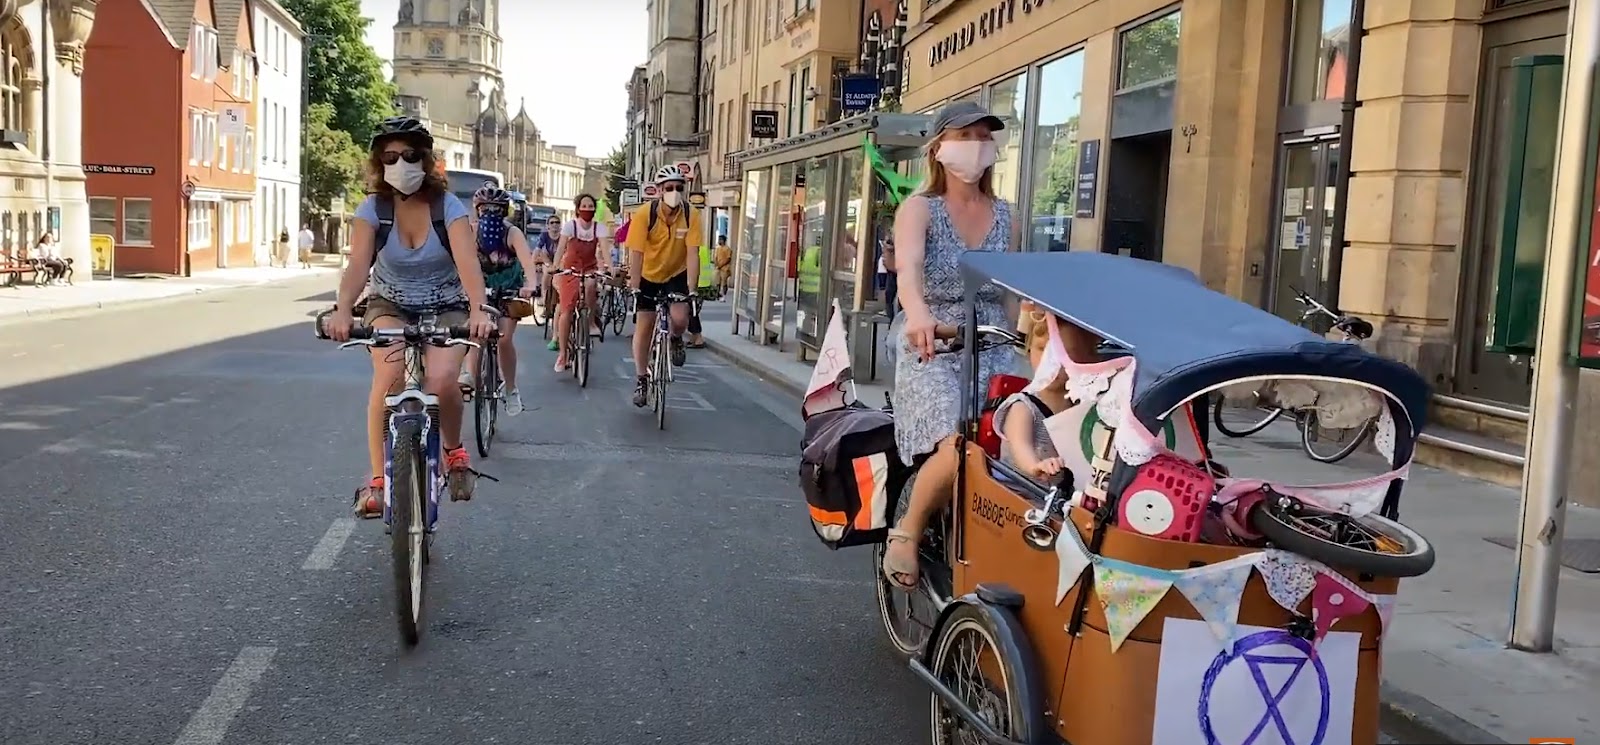 XR Rebel Ride - Rebels cycling in Oxford.